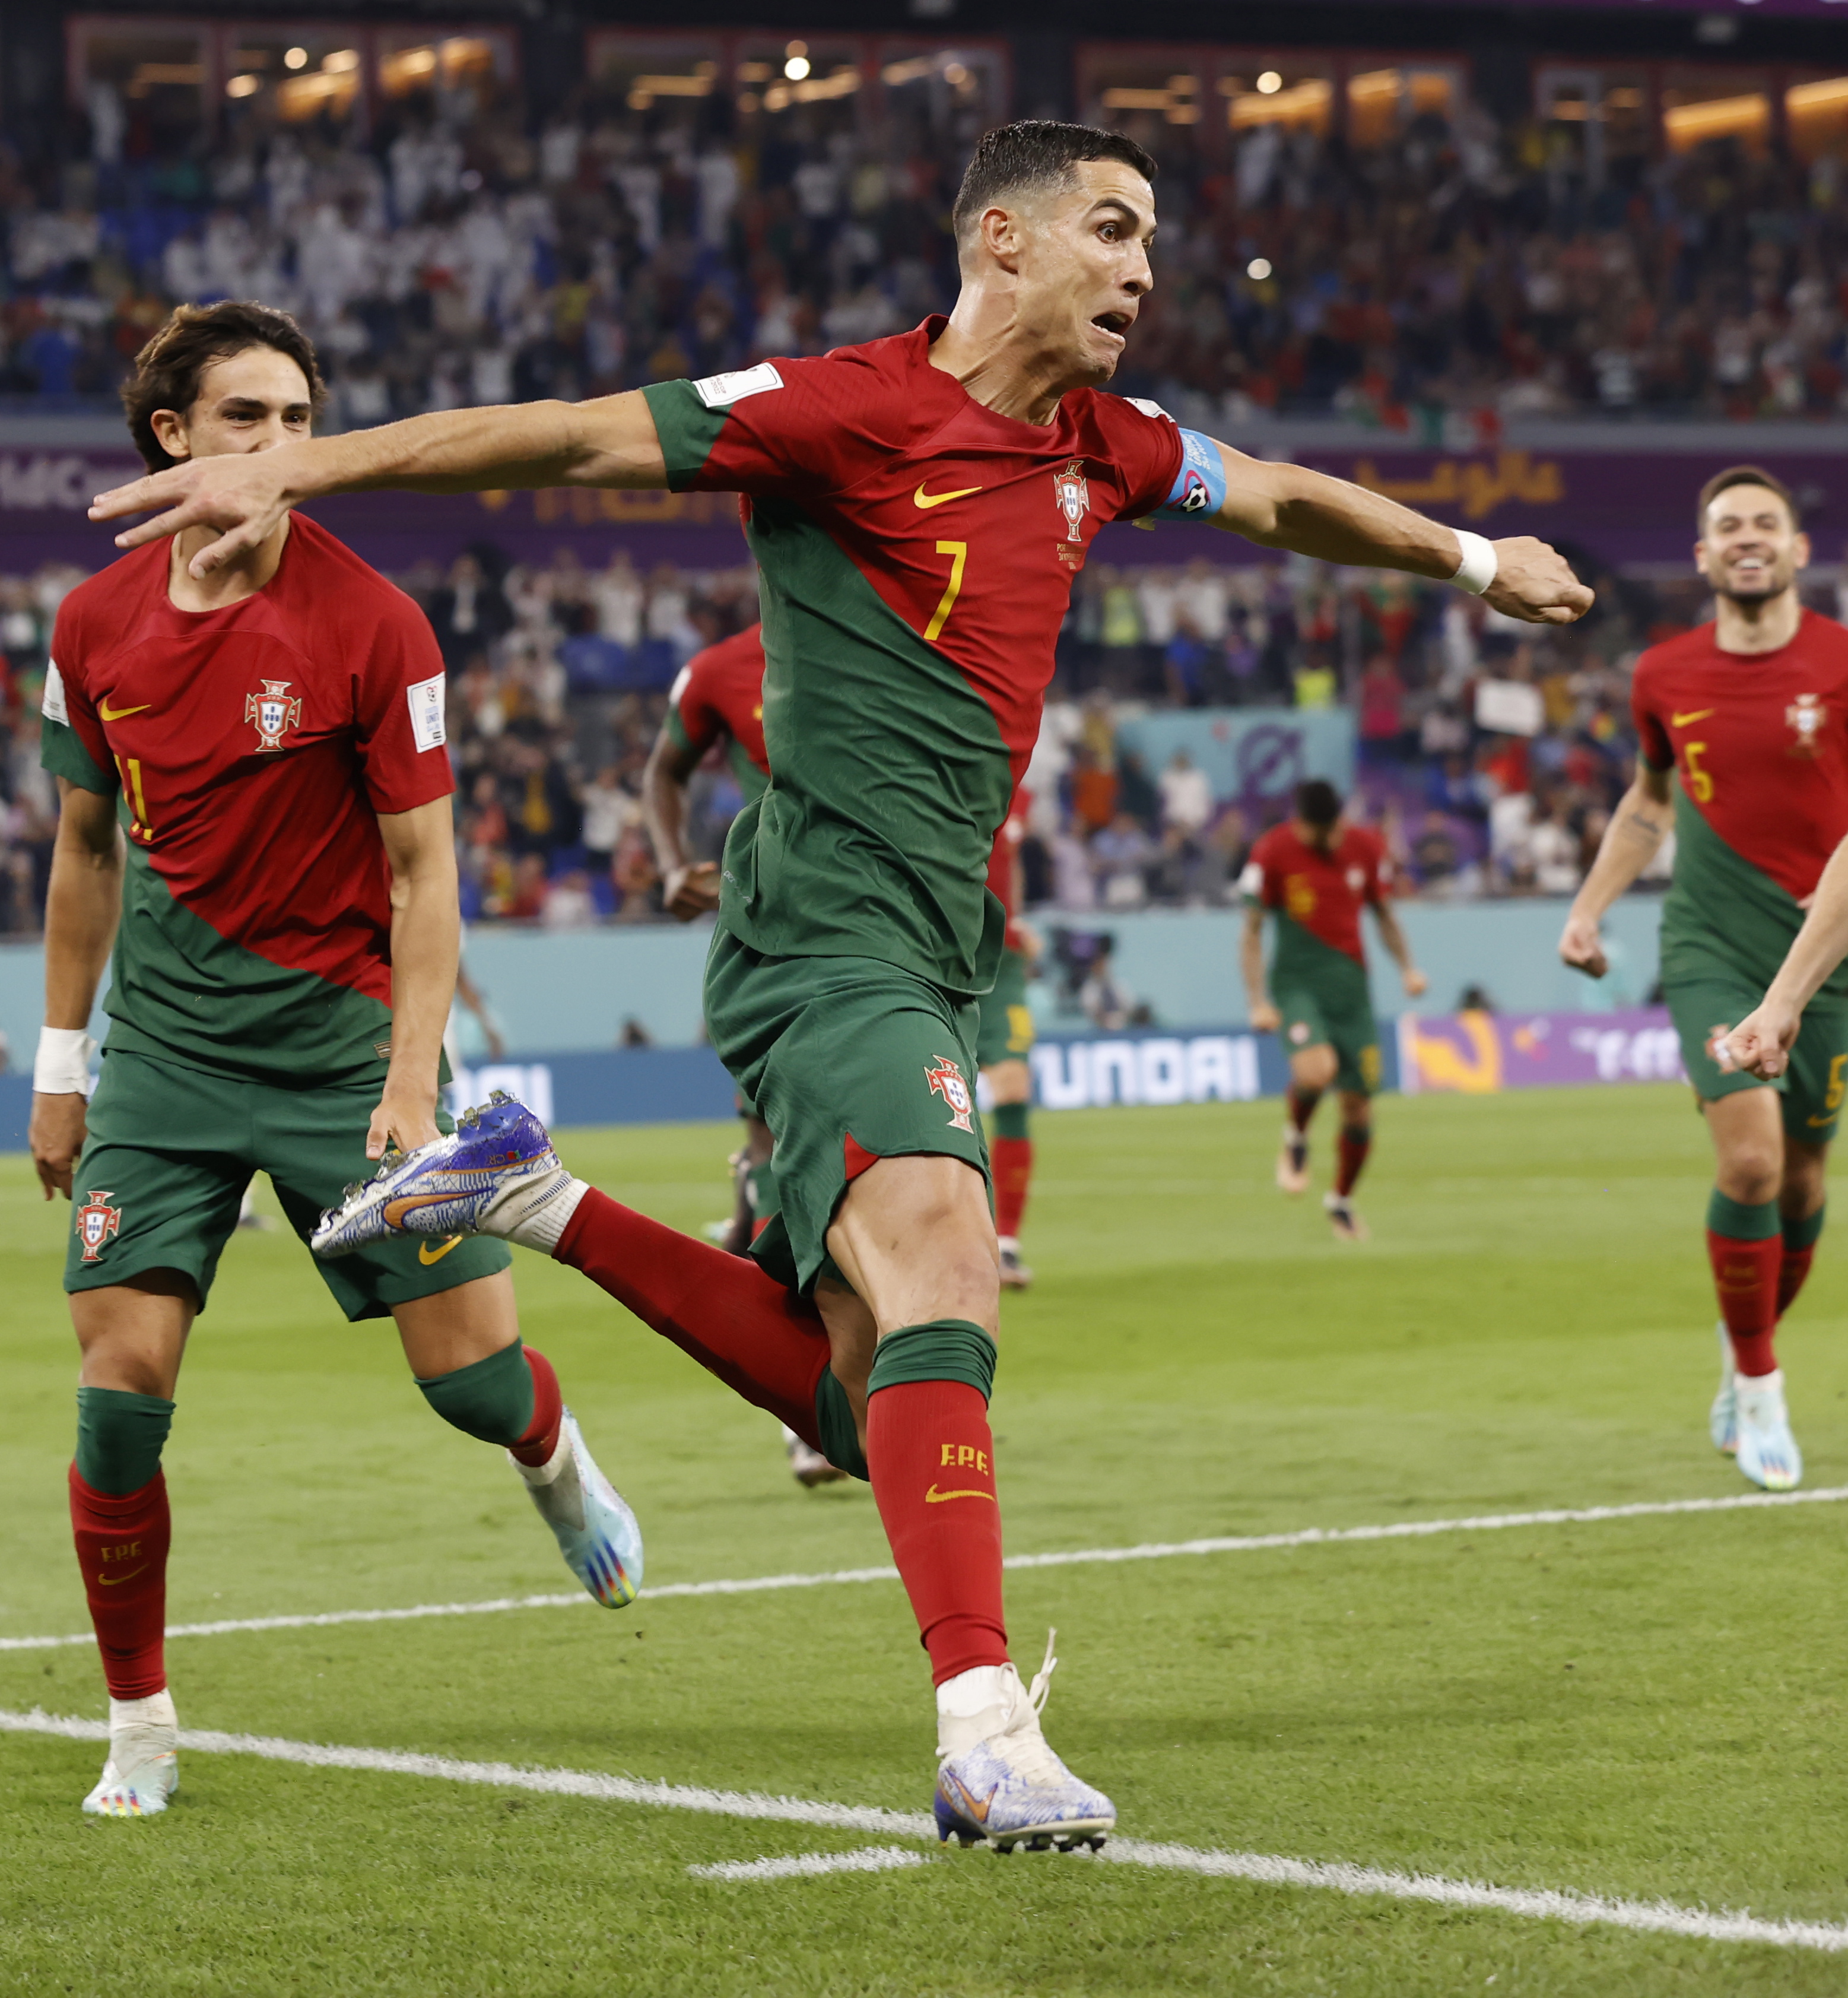 How will Ronaldo, Neymar and Messi watch the 2018 WC draw? - EgyptToday